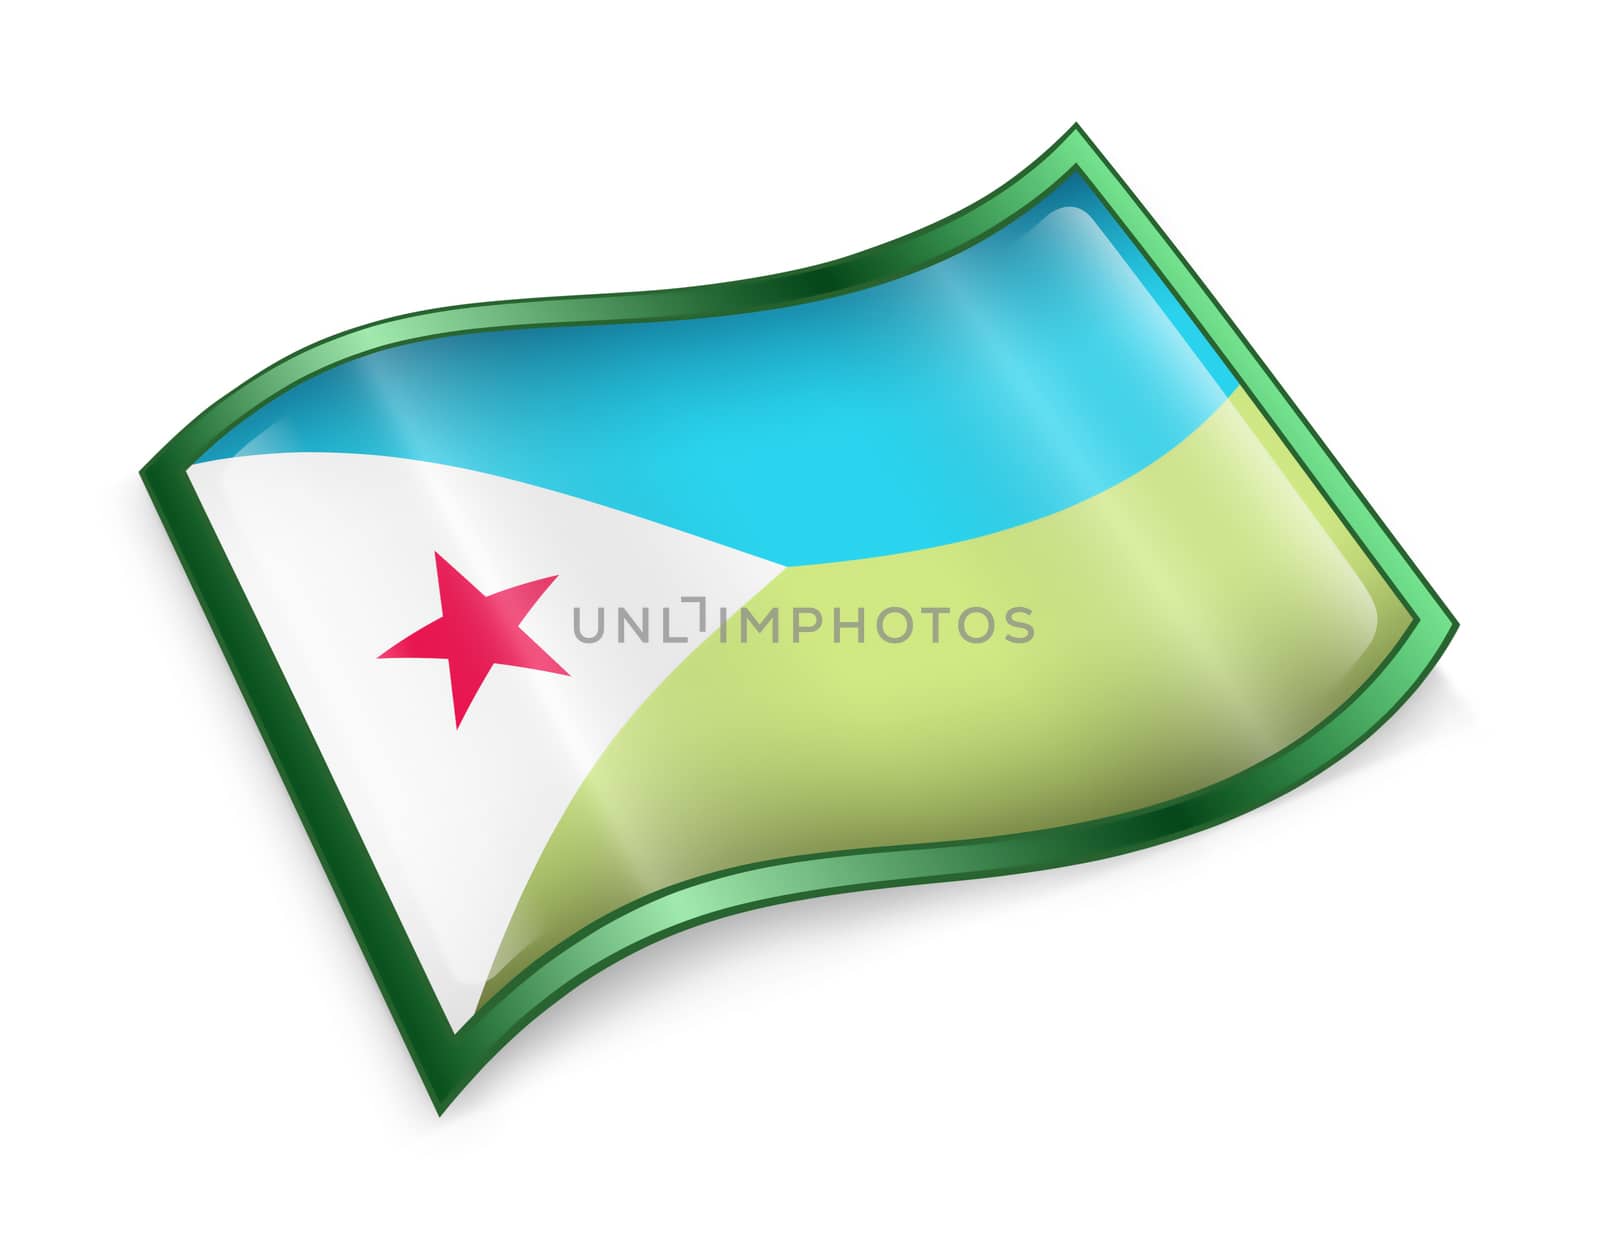 Djibouti Flag icon, isolated on white background.